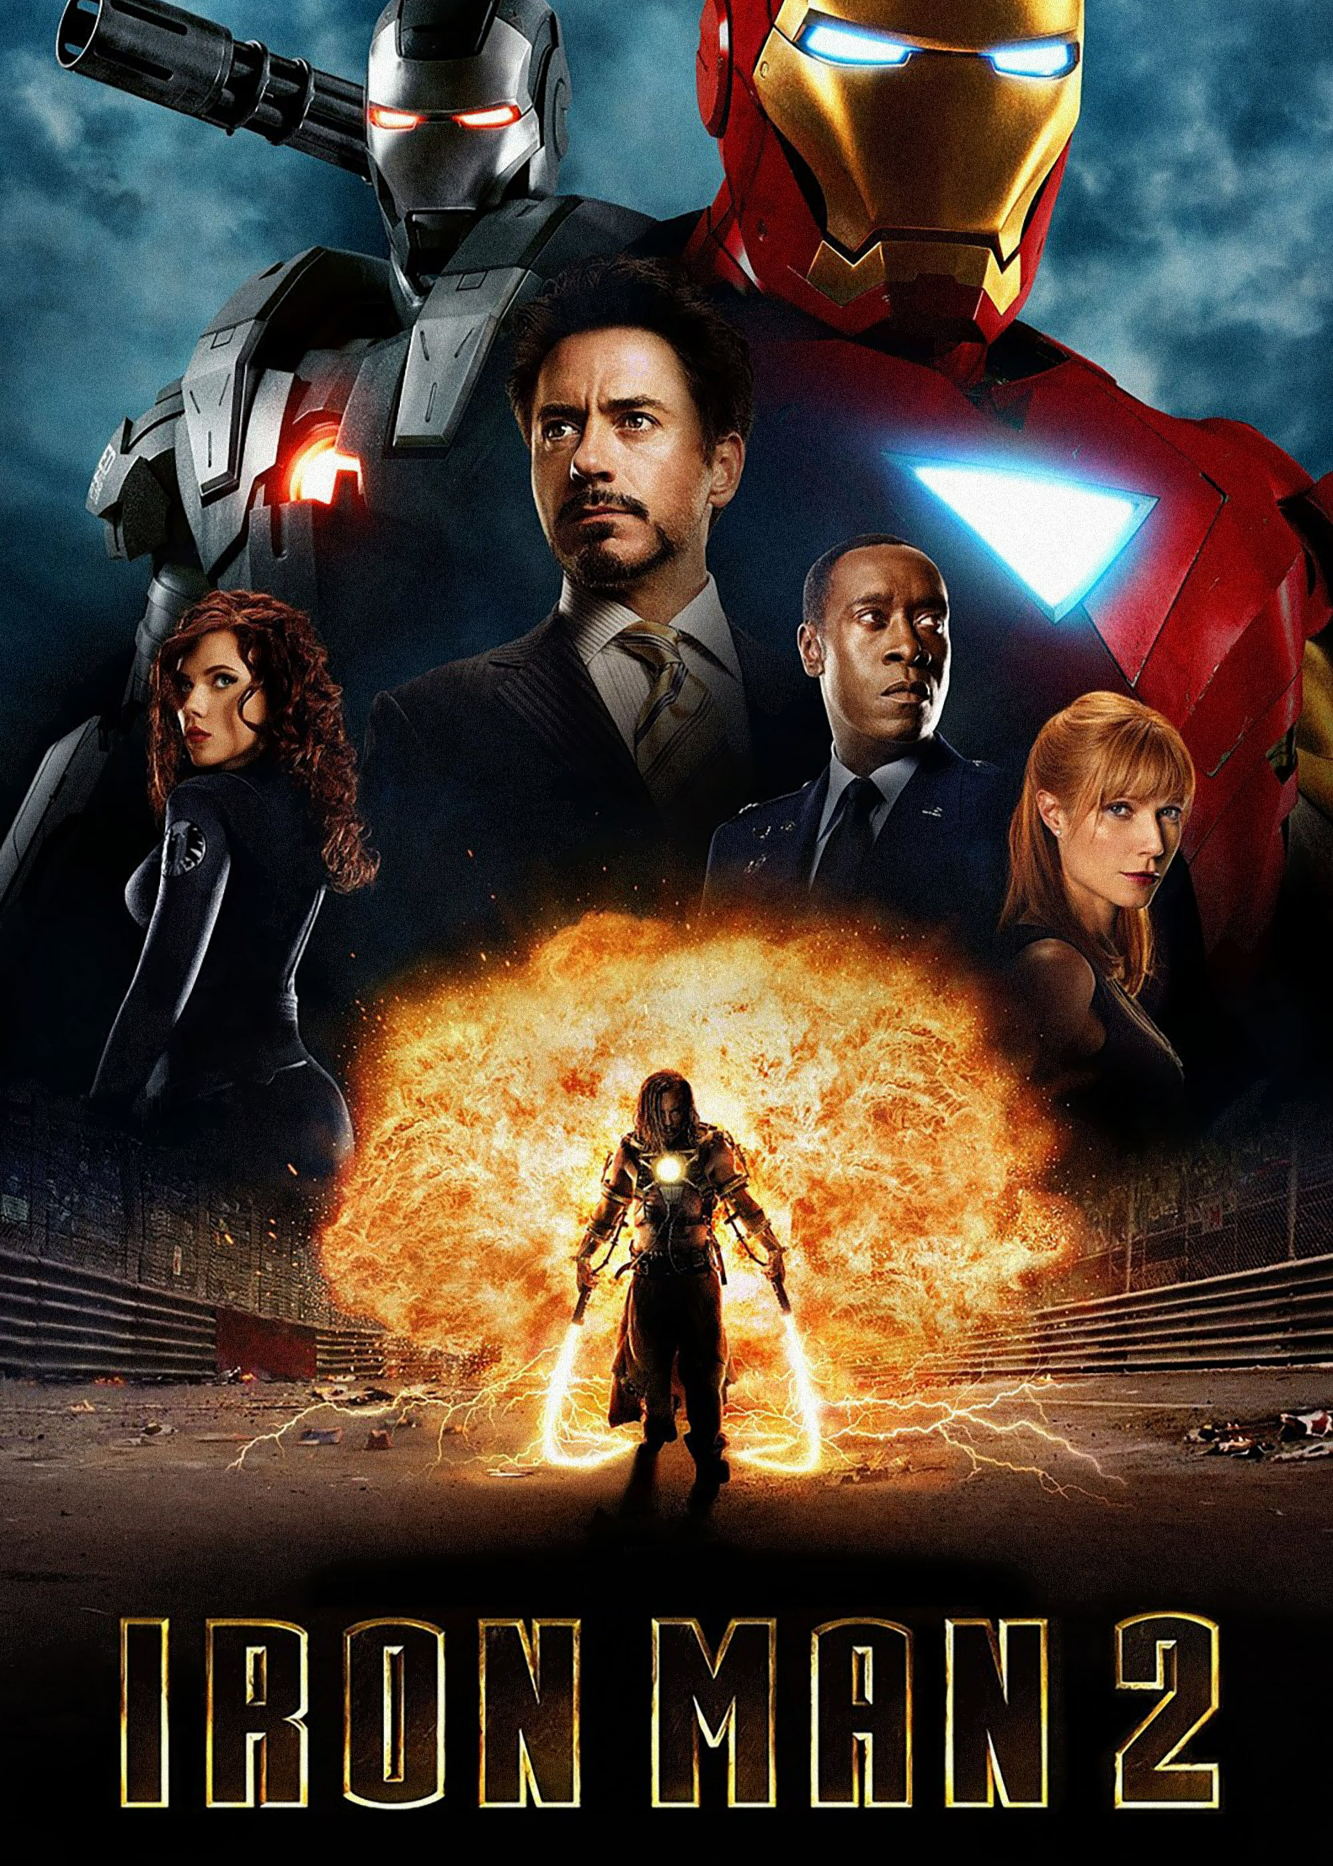 Người Sắt 2 - Iron Man 2